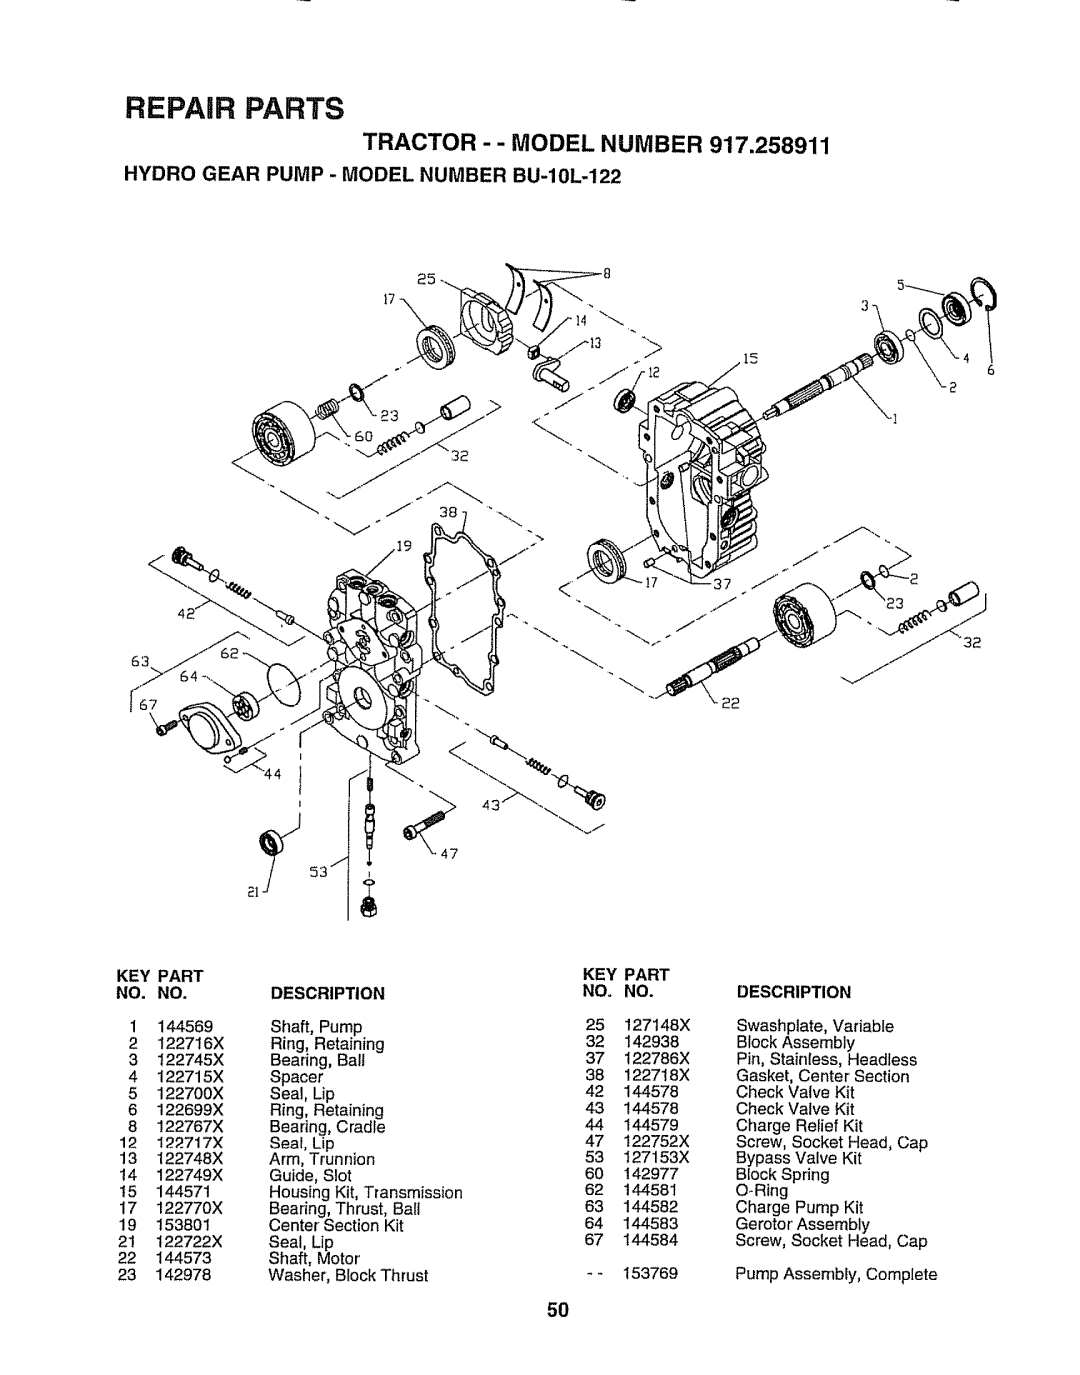 Craftsman 917.258911 HYDRO GEAR PUMP - MODEL NUMBER BU-10L-122, 122699X, 122767X, Repair Parts, Tractor - - Model Number 